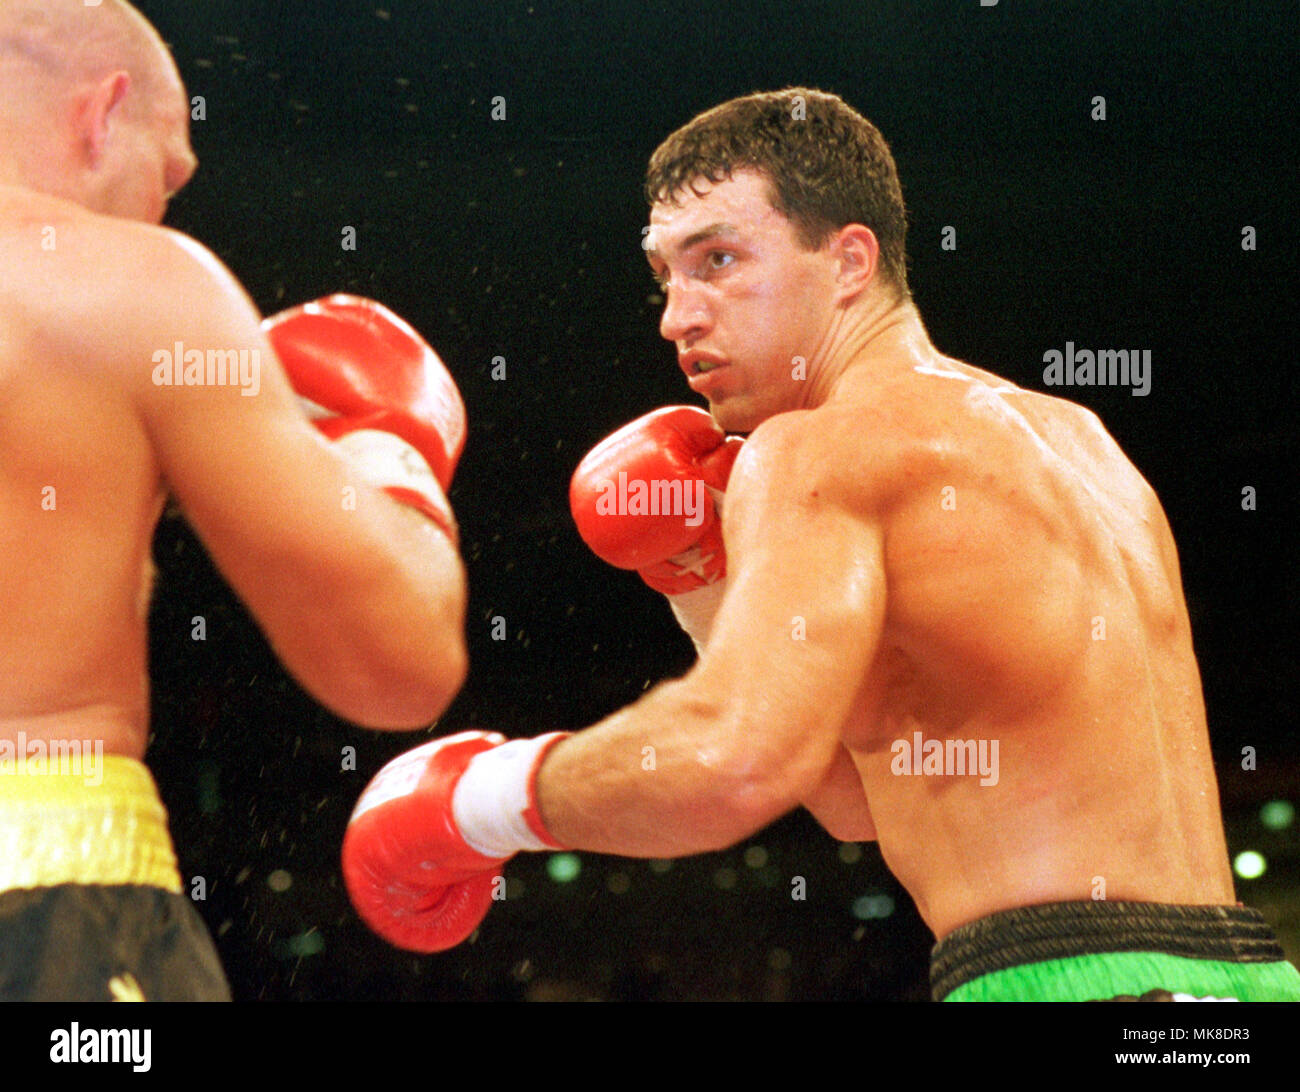 Boxing: Koln Arena Cologne Germany 25.9.1999, EBU European Heavyweight Championship fight Axel Schulz (GER, left) vs Wladimir Klitschko (UKR) Stock Photo